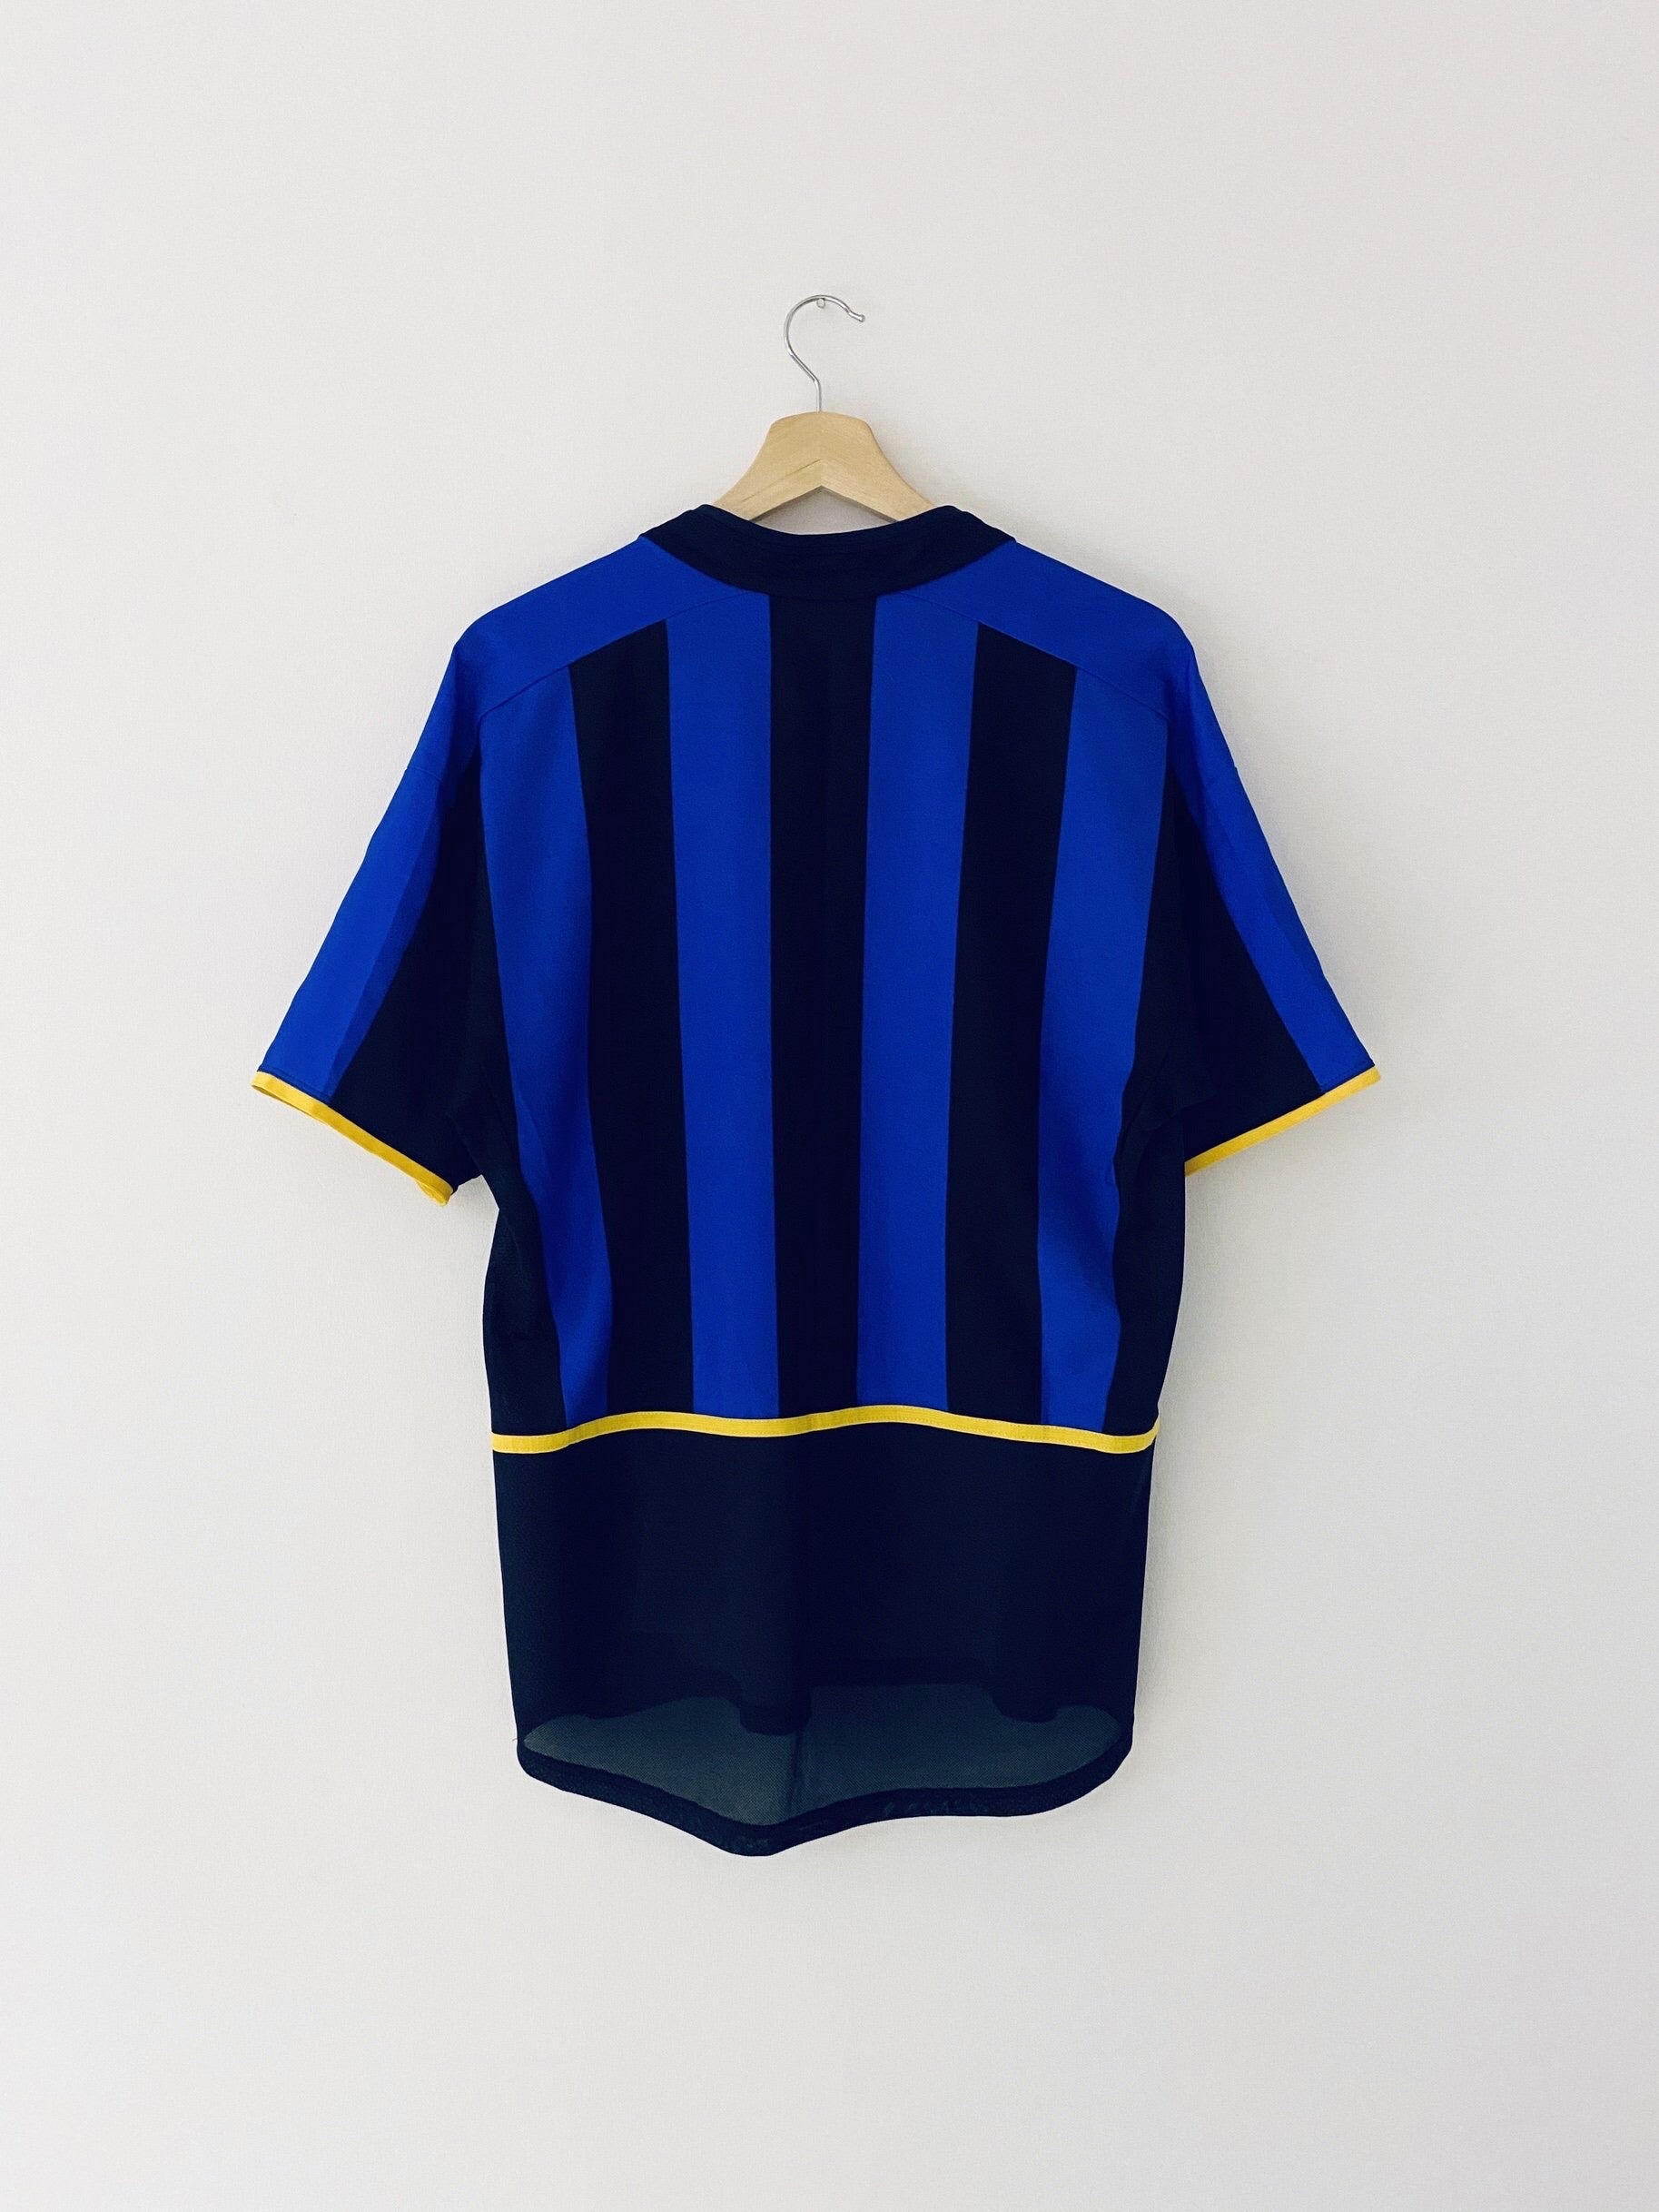 2002/03 Inter Milan Home Shirt (S) 9.5/10